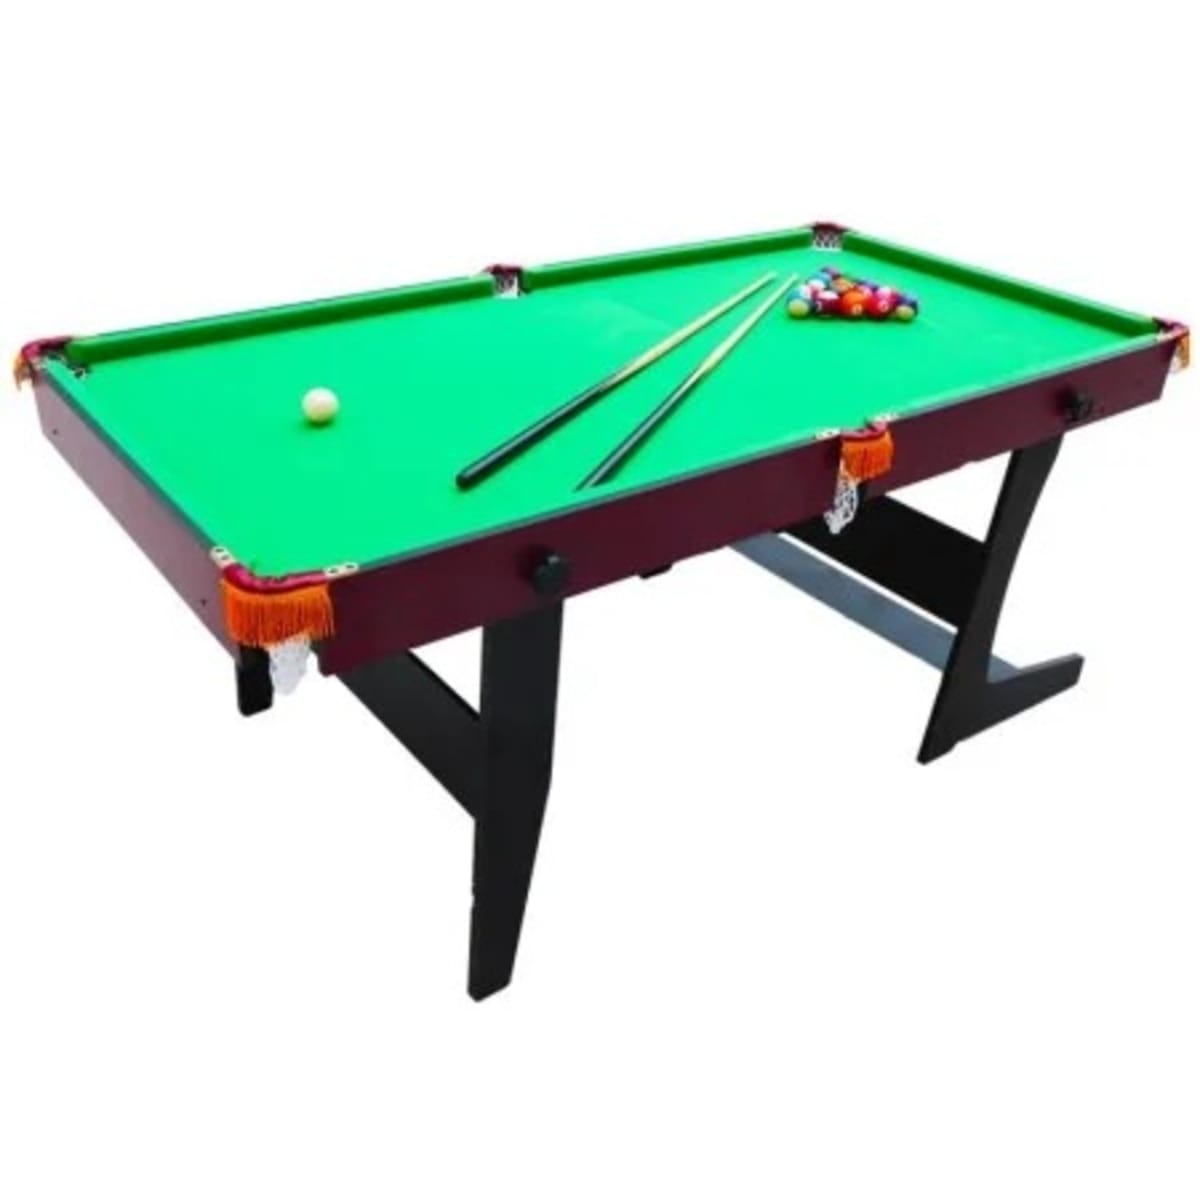 Snooker Pool Table - 6 Feet